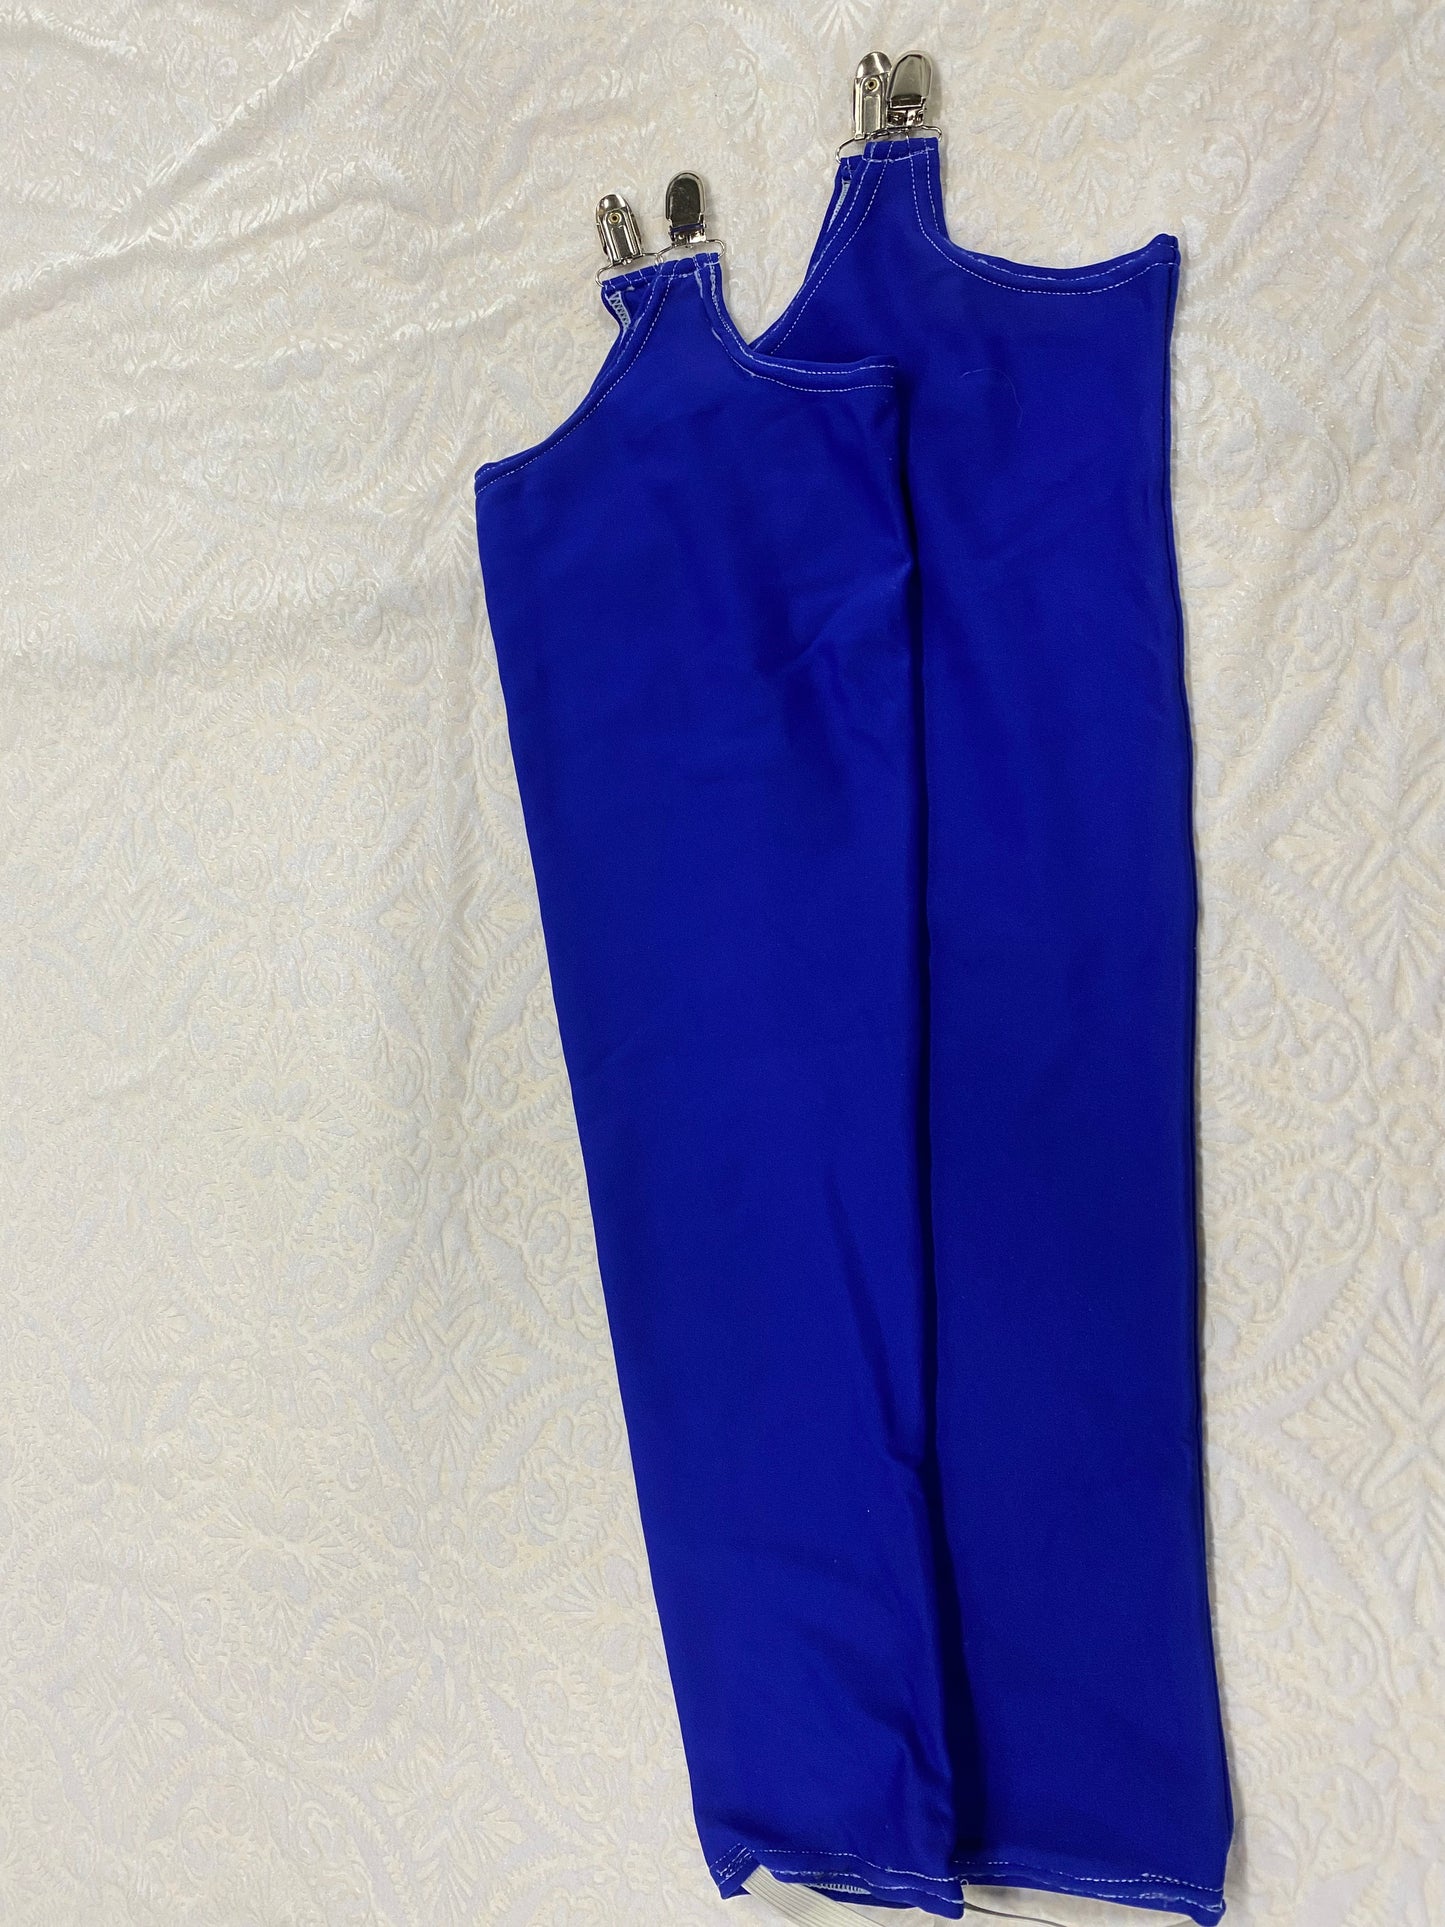 Pair of Royal Blue Suspender - Leg Only